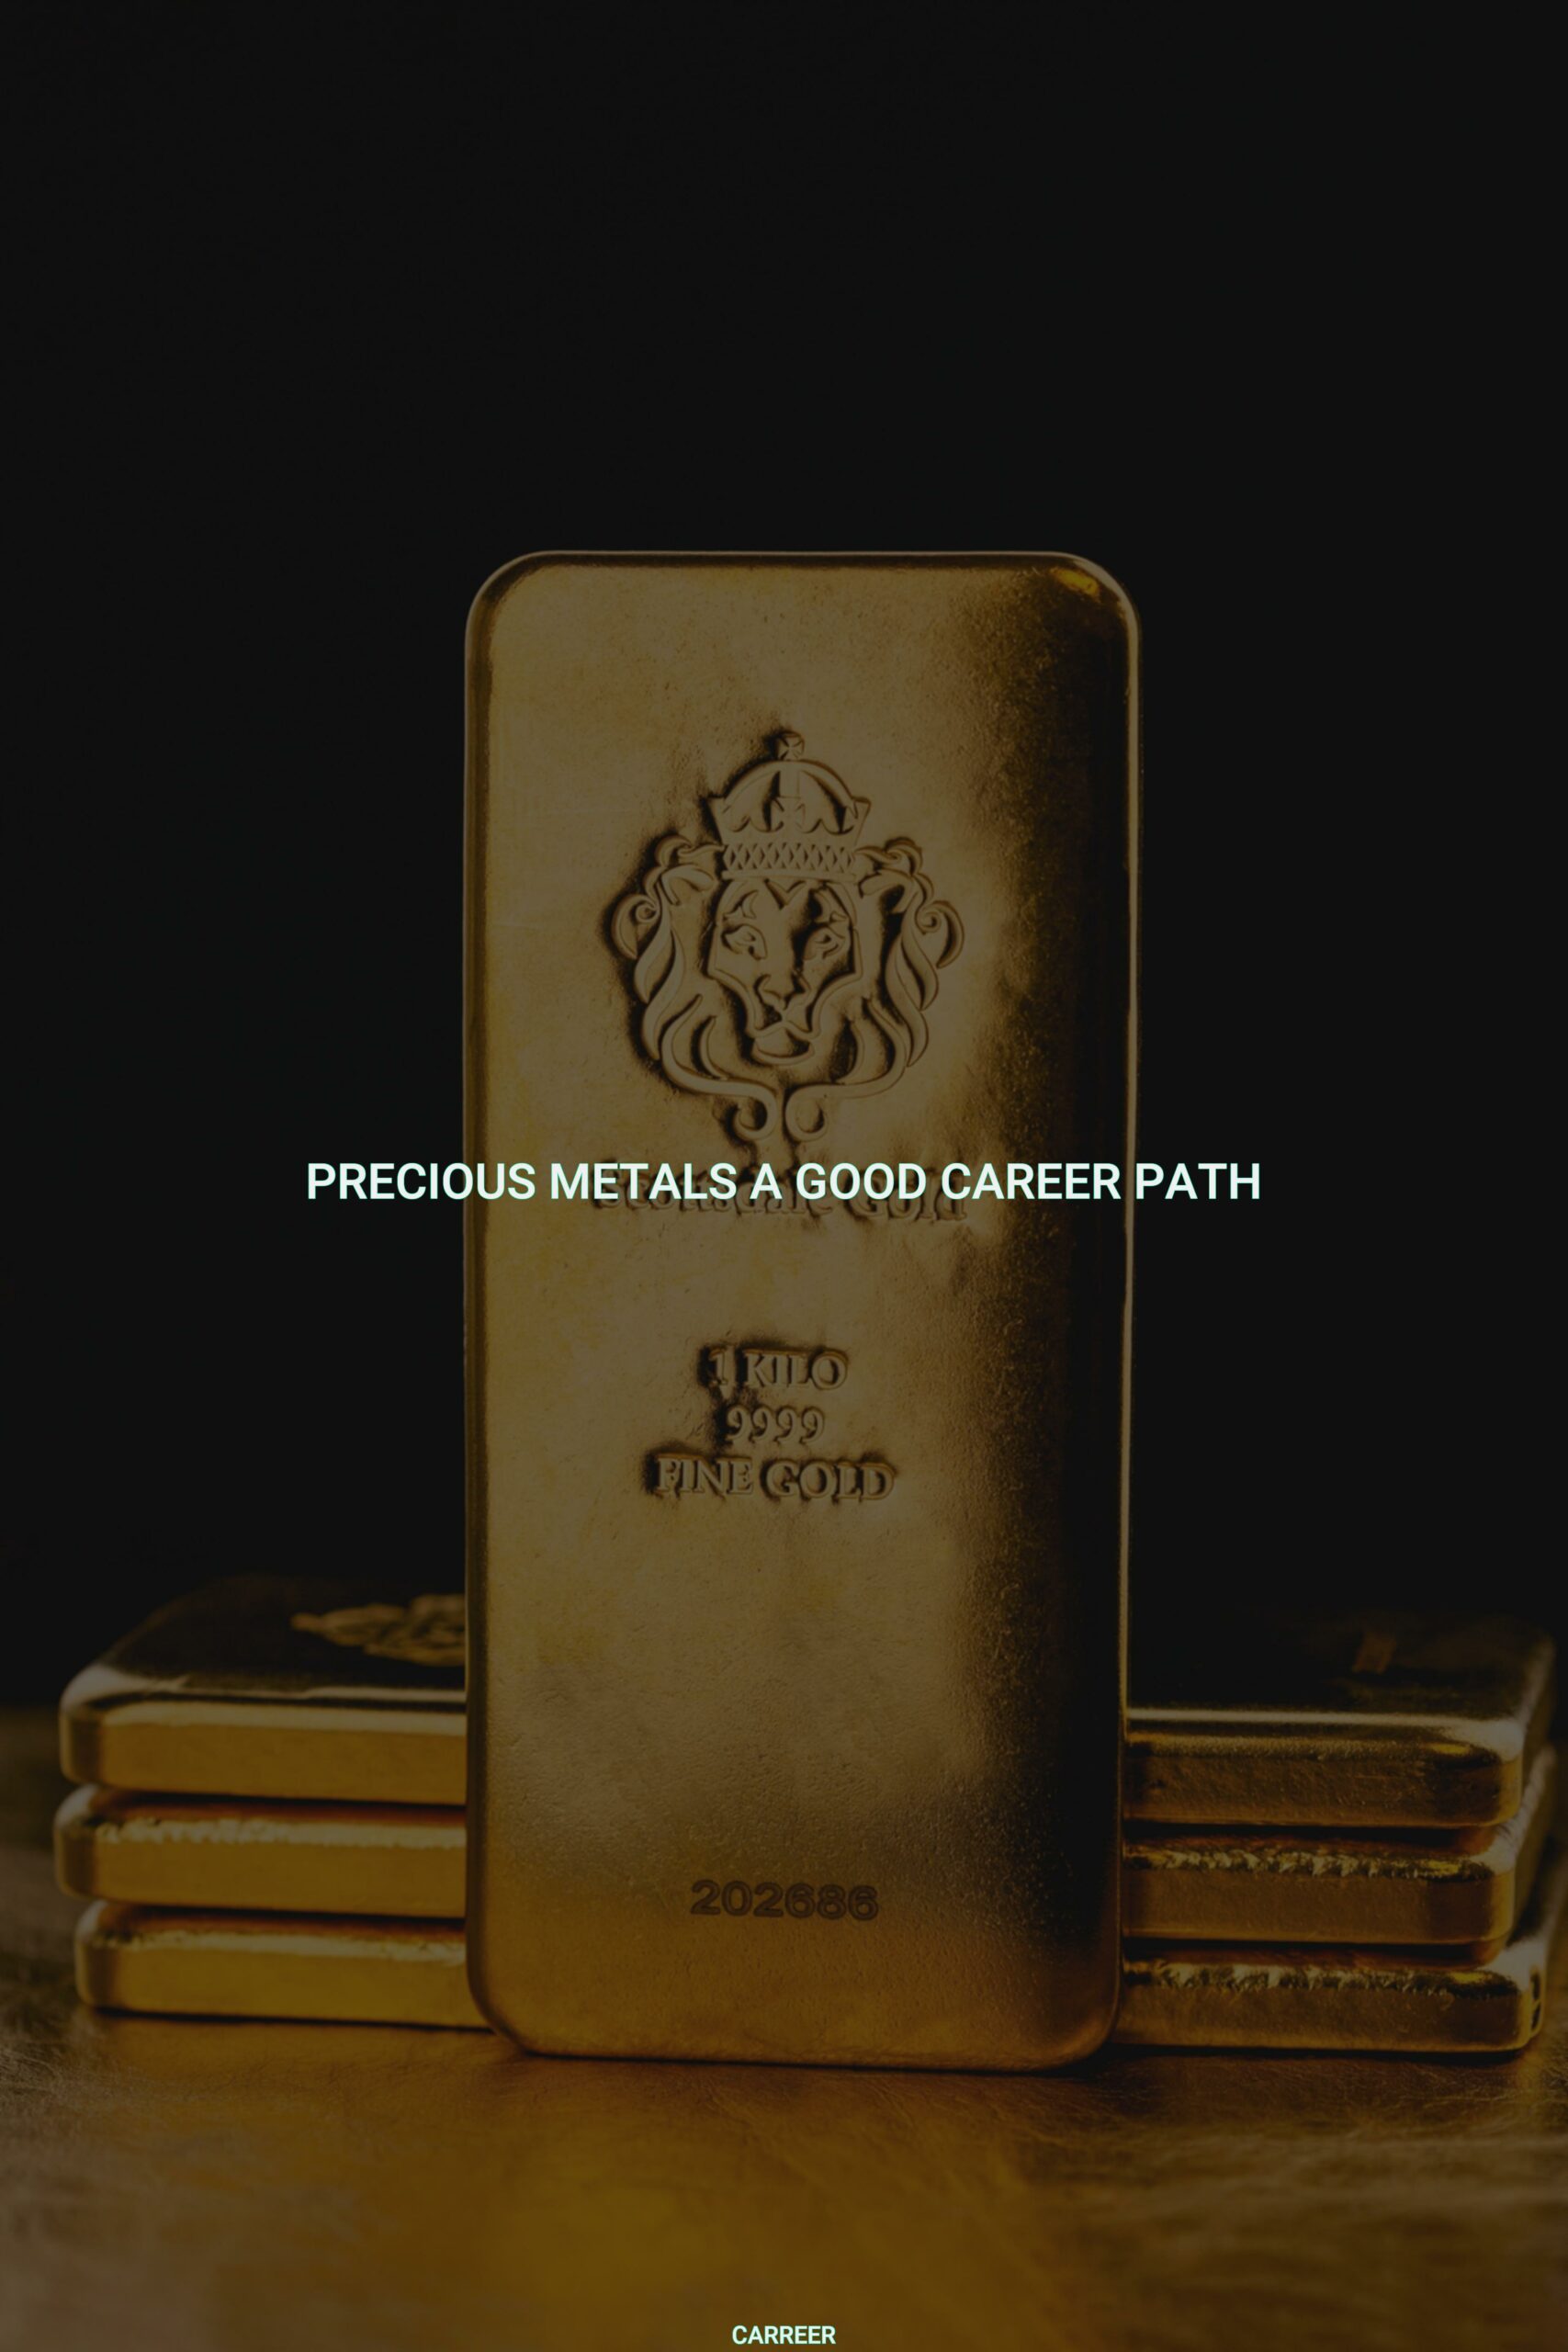 Precious metals a good career path